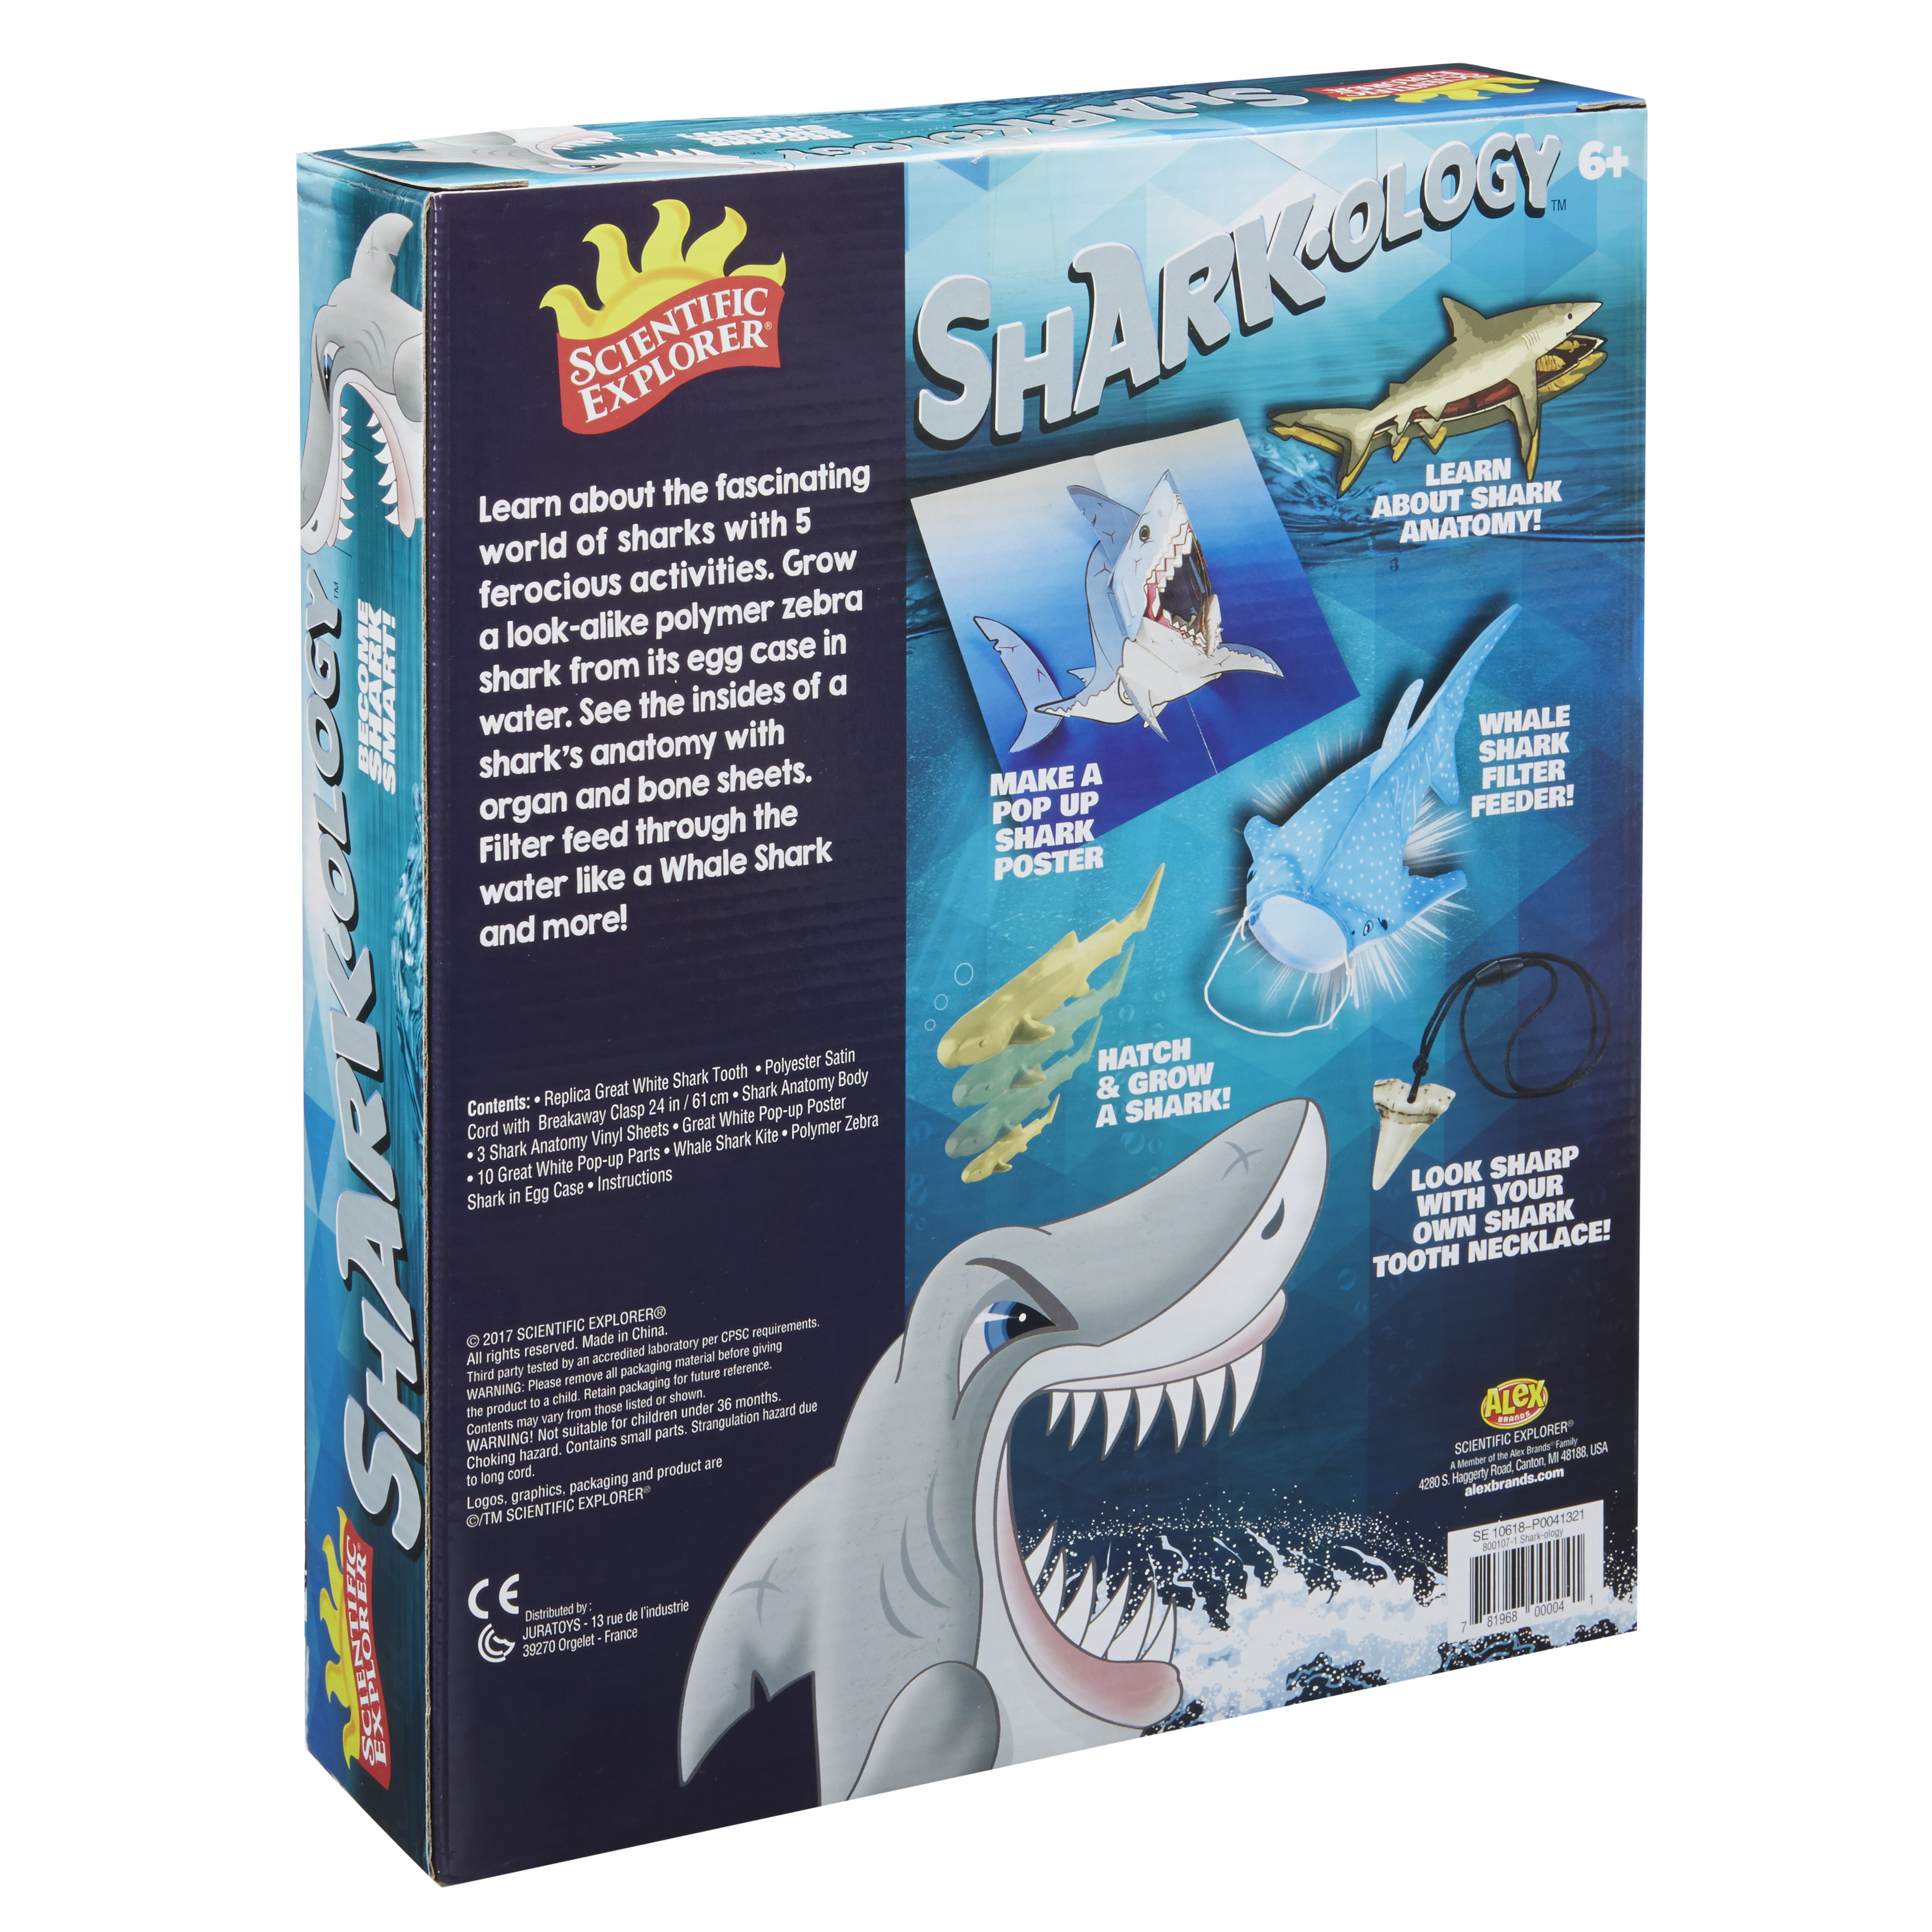 Sharkology Scientific Explorer Activity Kit Become Shark Toys Learning Board for sale online 